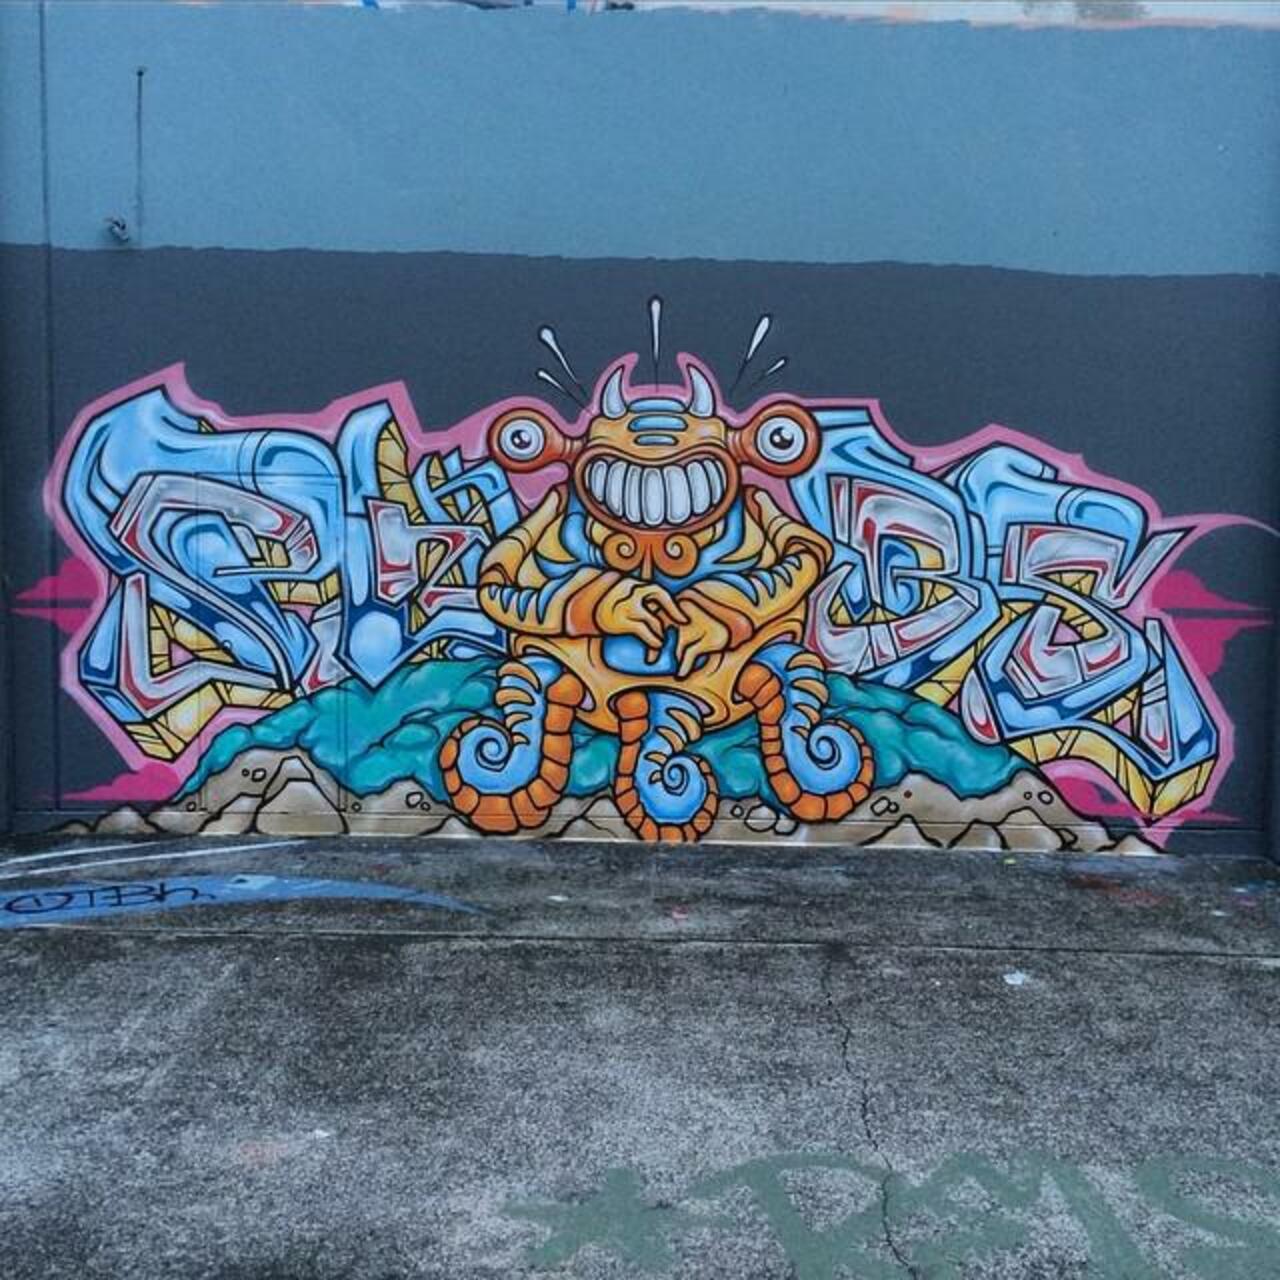 Phibs. Marrickville. #phibs #walls #graffiti #streetart #urbanart #mural #instaart #instagrafite #streetartsydney #… http://t.co/6zc3l54BCW